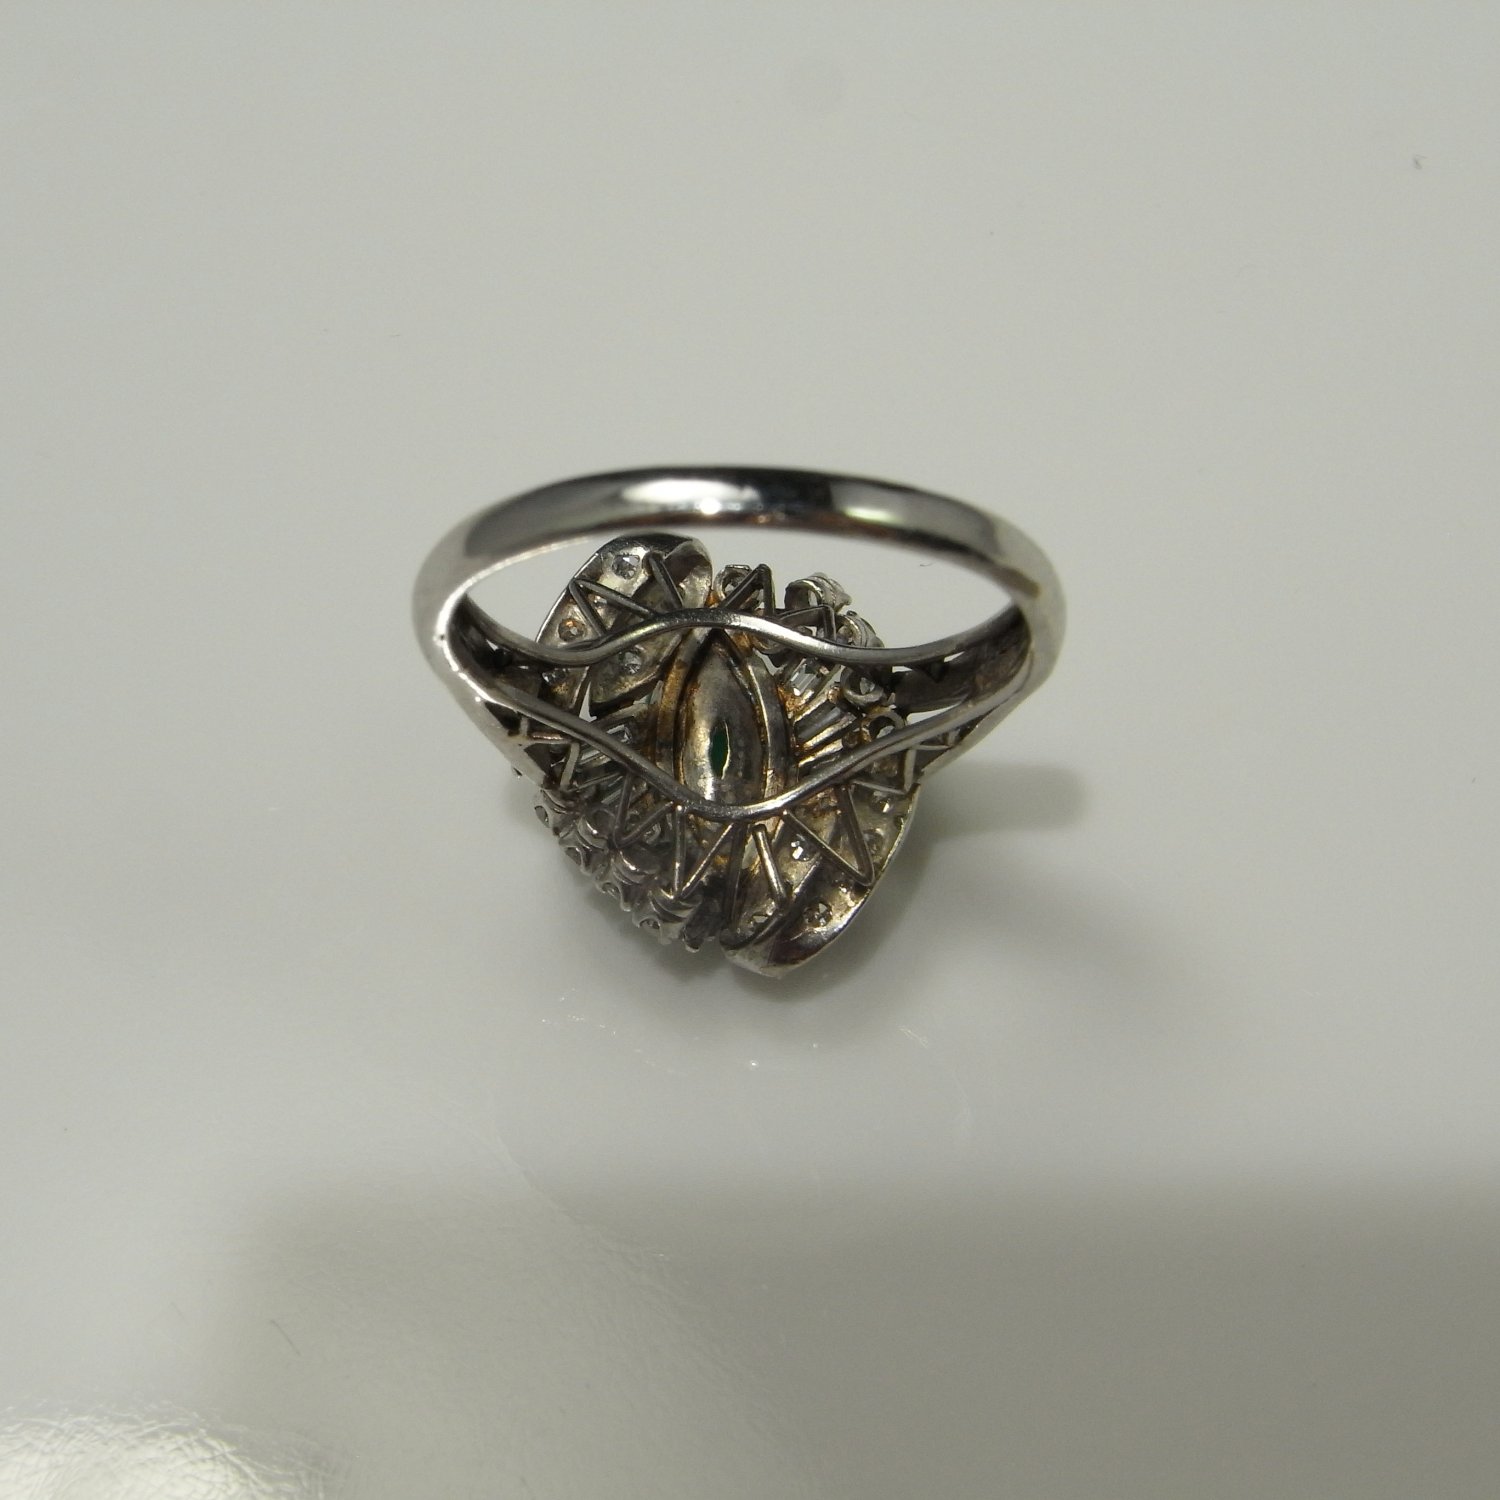 Vivid Green UNTREATED Jadeite Jade Diamond Engagement Ring 18K White Gold Art Deco Handmade One of a Kind Unique Wedding Anniversary